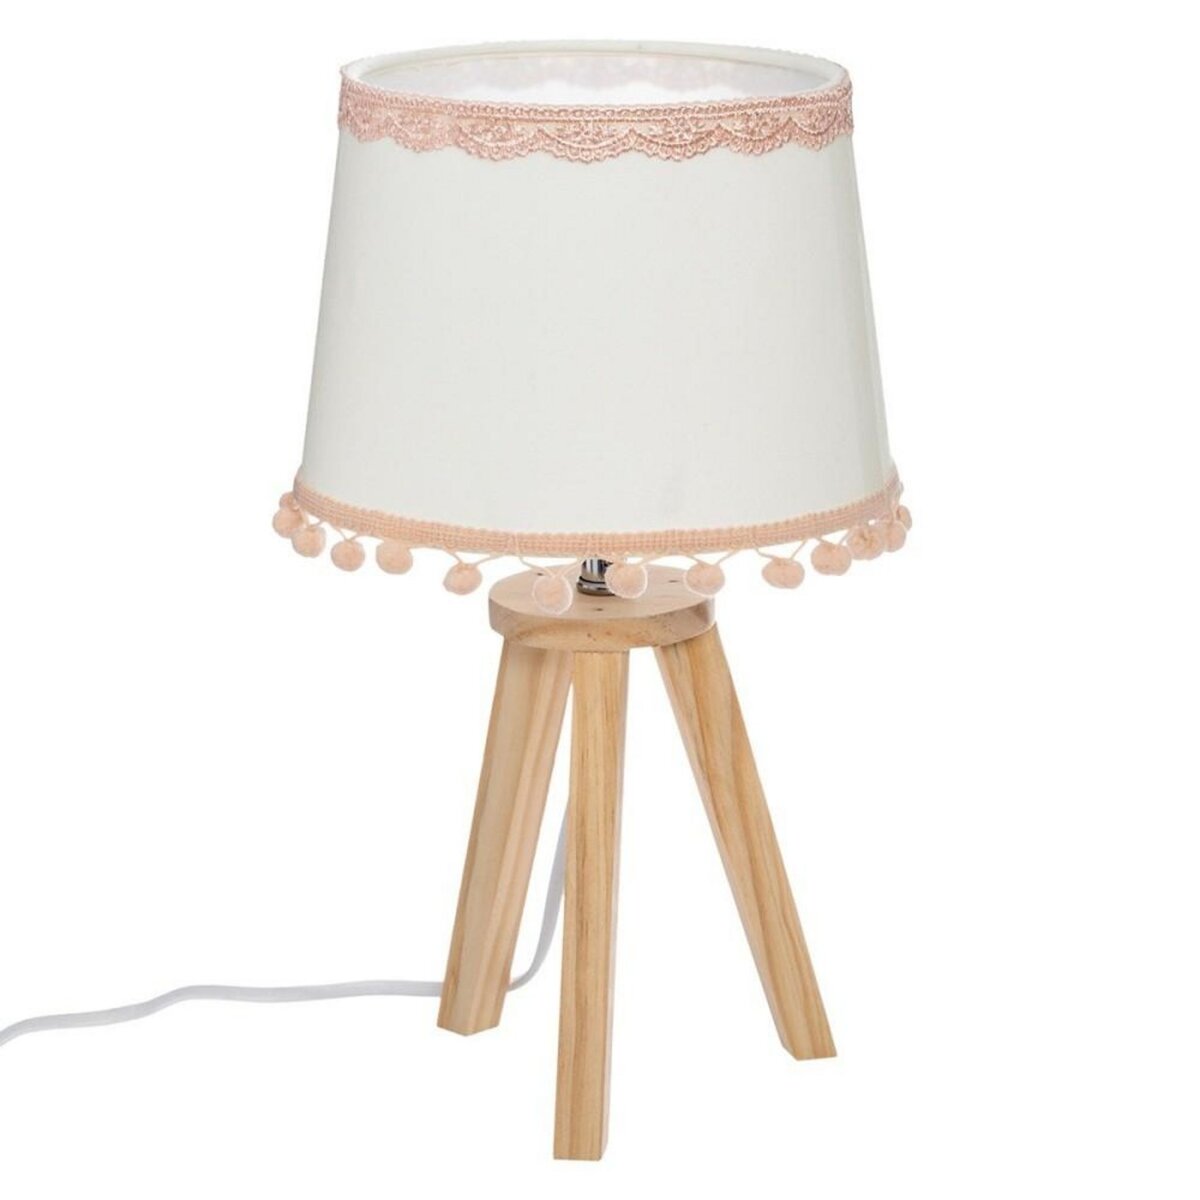 ATMOSPHERA Lampe bois avec pompons rose